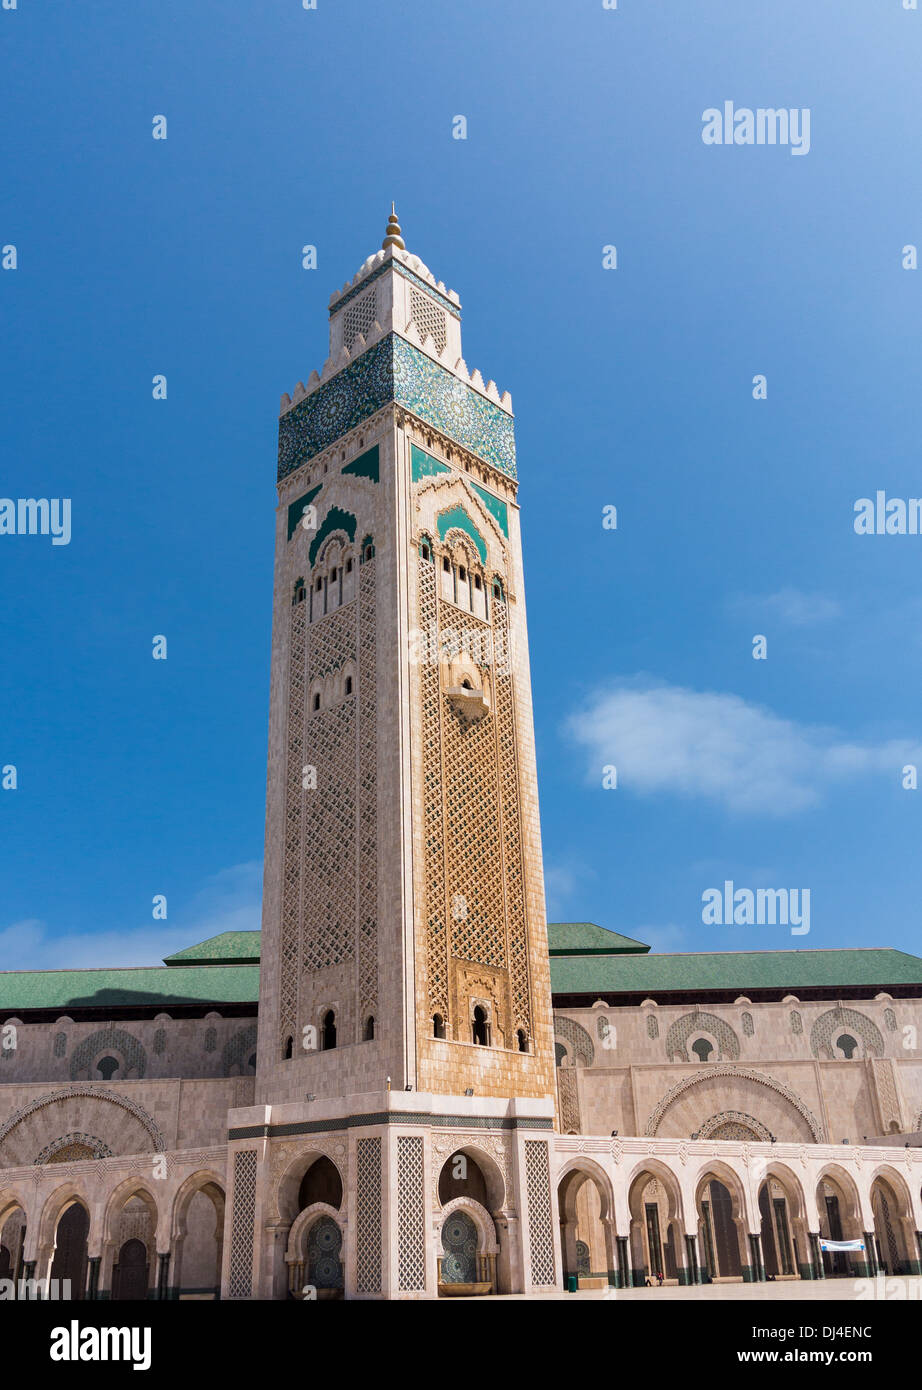 The Hassan II Mosque or Grande Mosquee Hassan II in Casablanca, Morocco. Stock Photo